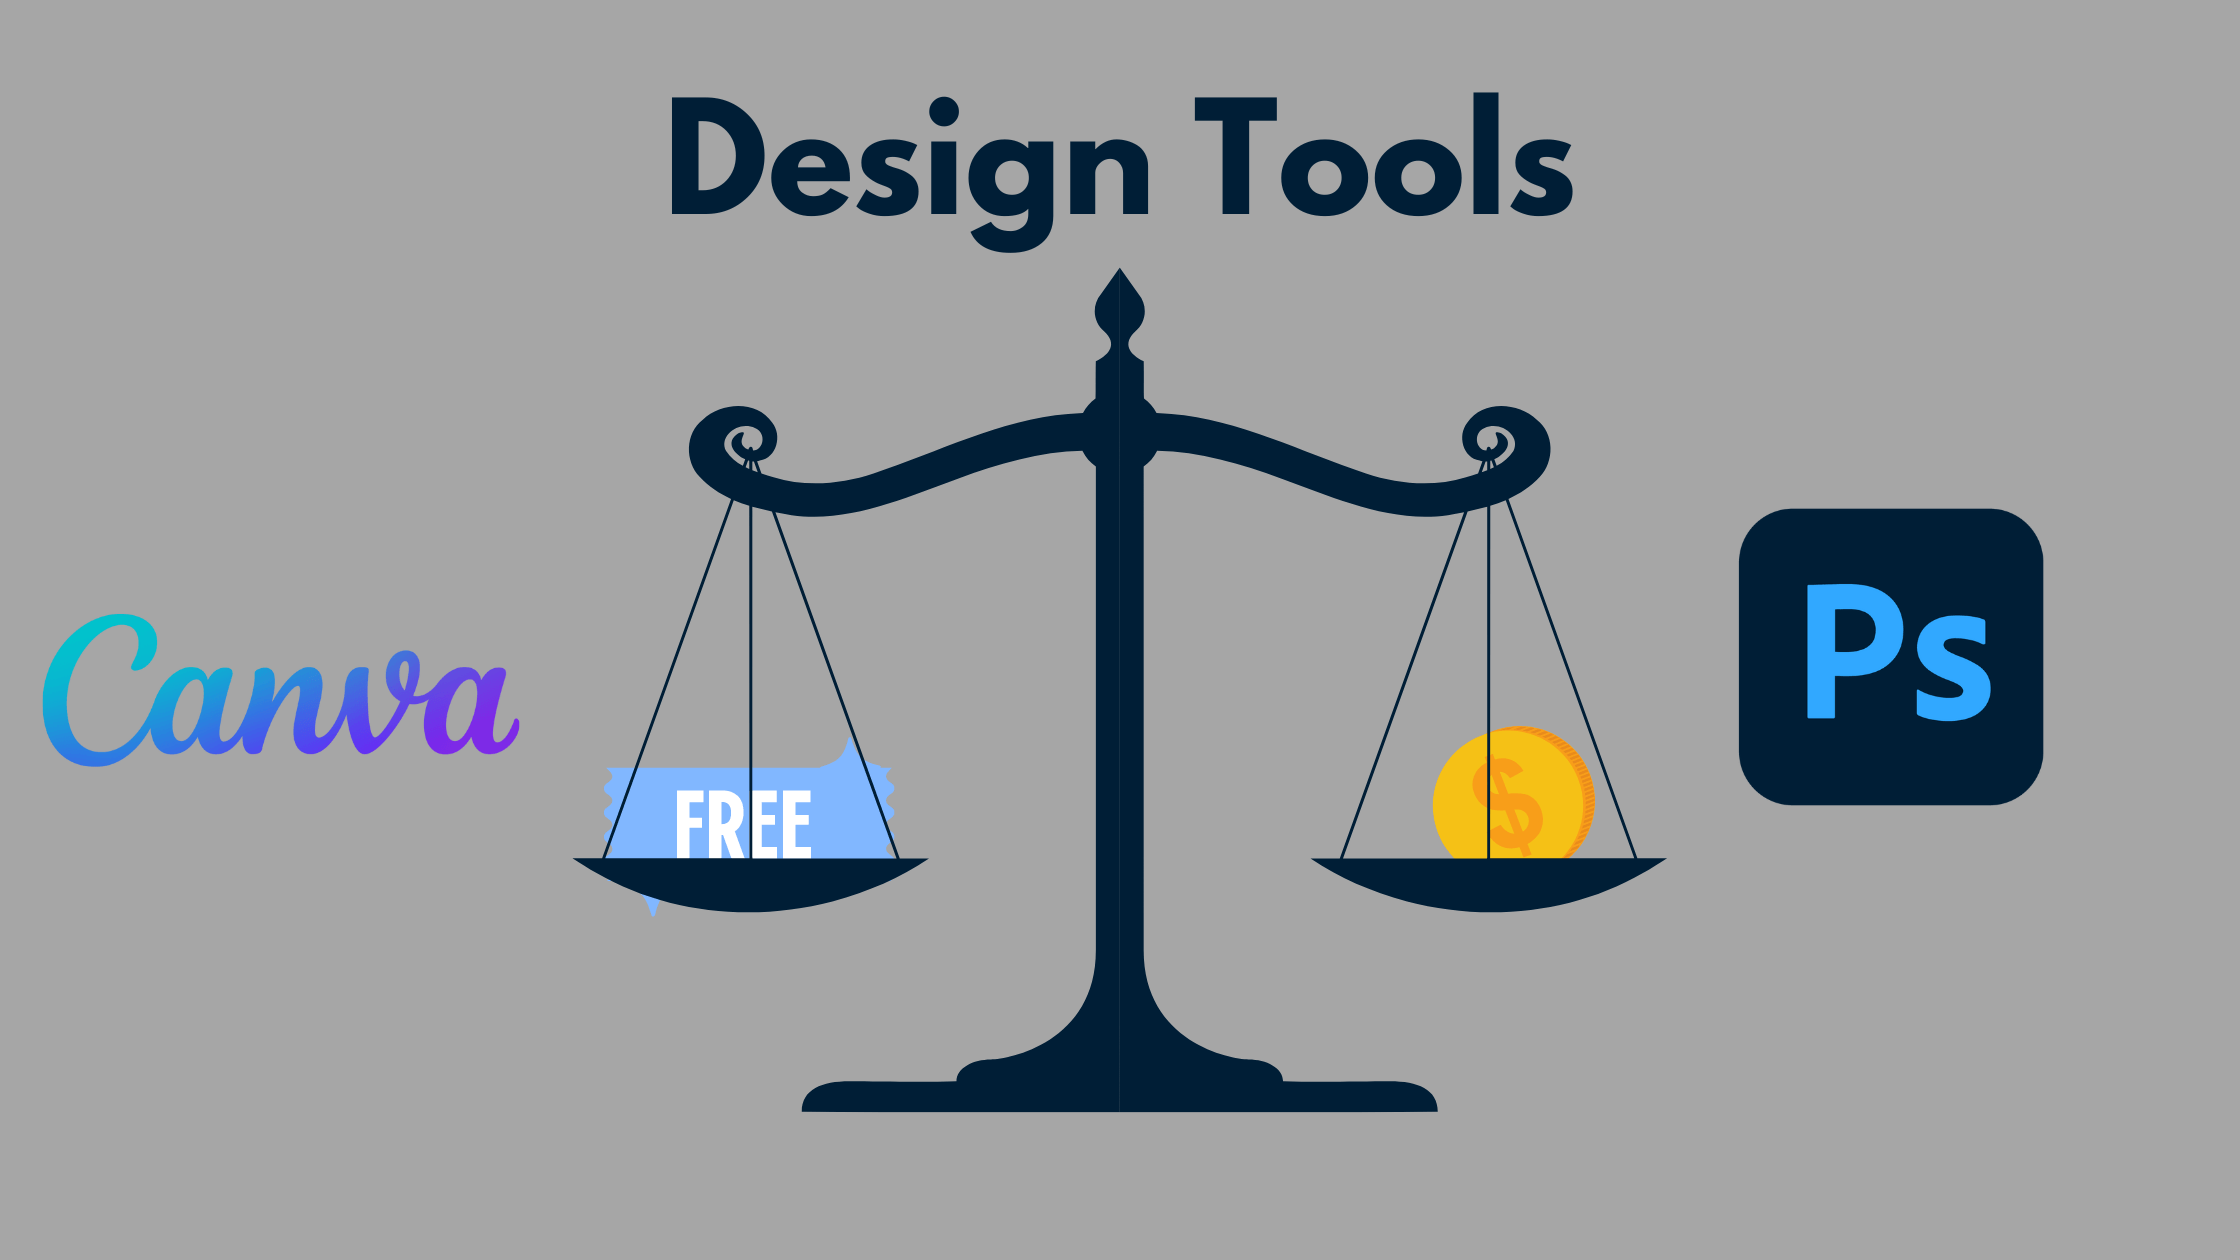 Free vs Paid Digital Tools